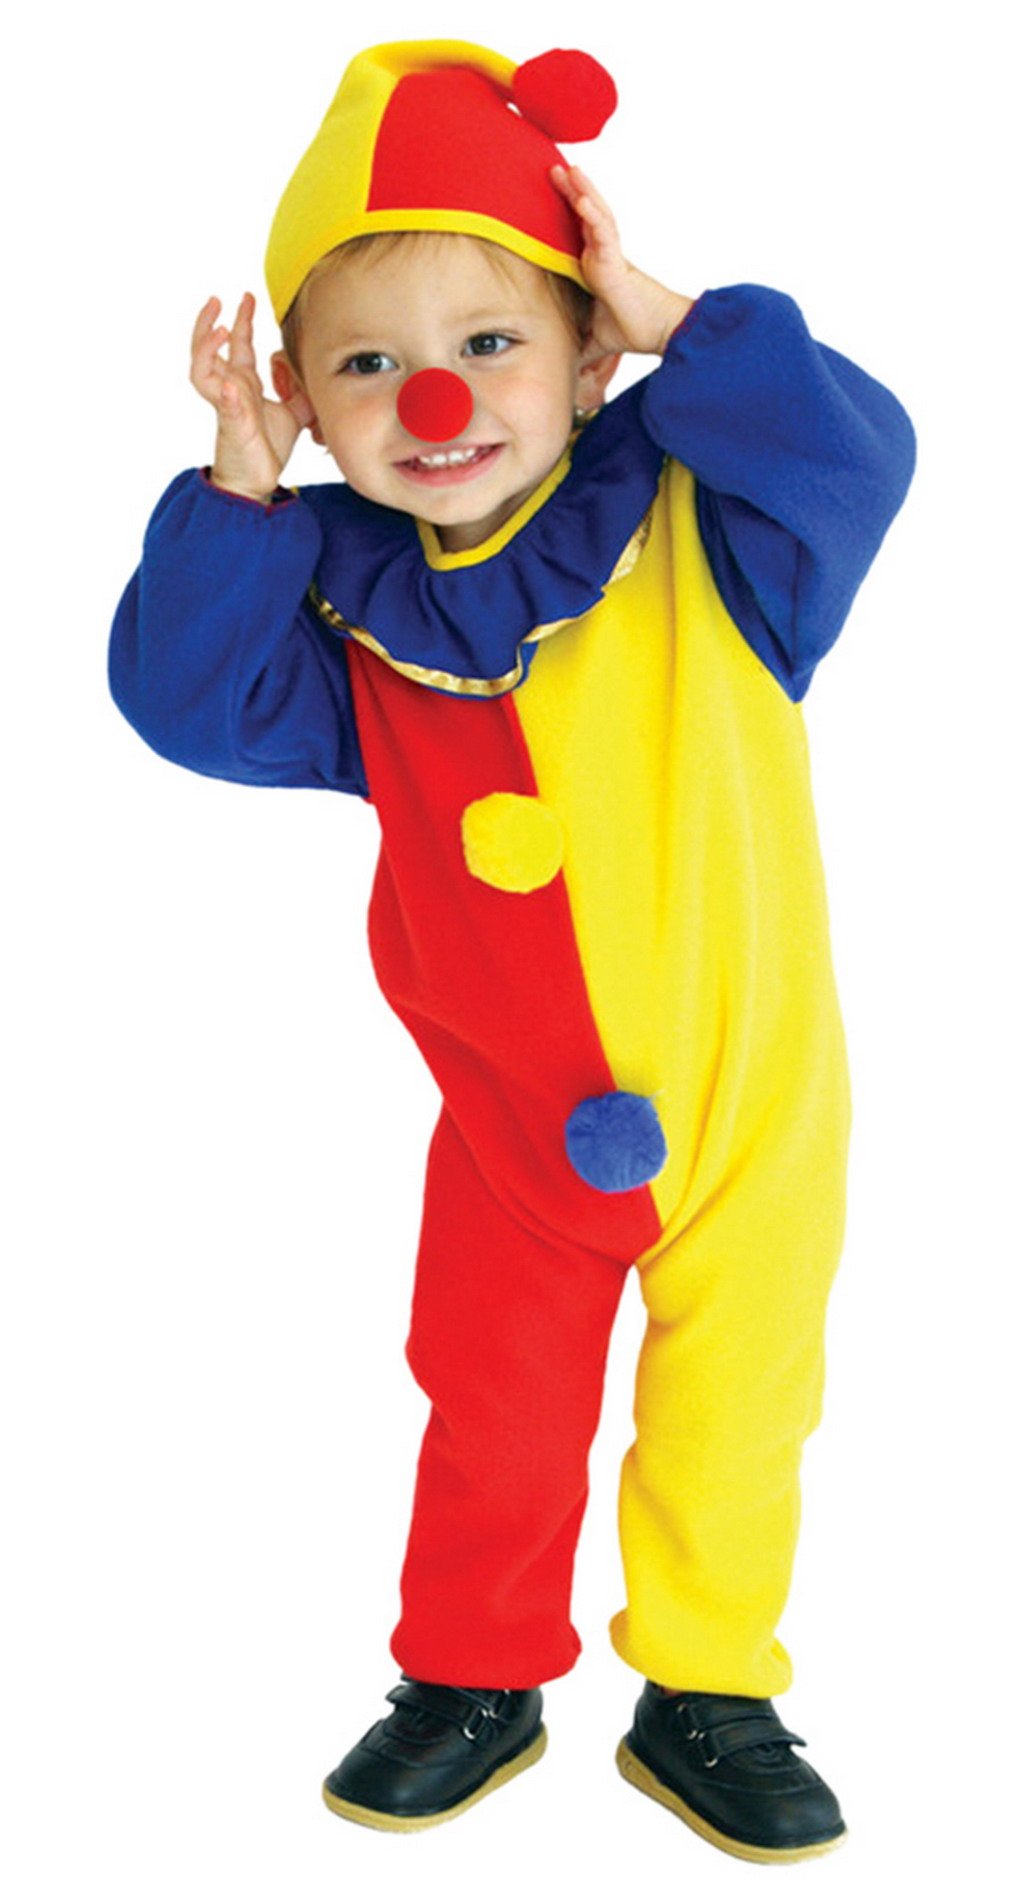 EOZY Kleinkind Clown Kostüm Halloween Jumpsuit mit Kapuze Karneval Fasching Kostüm Cosplay S Körpergröße 95-110cm